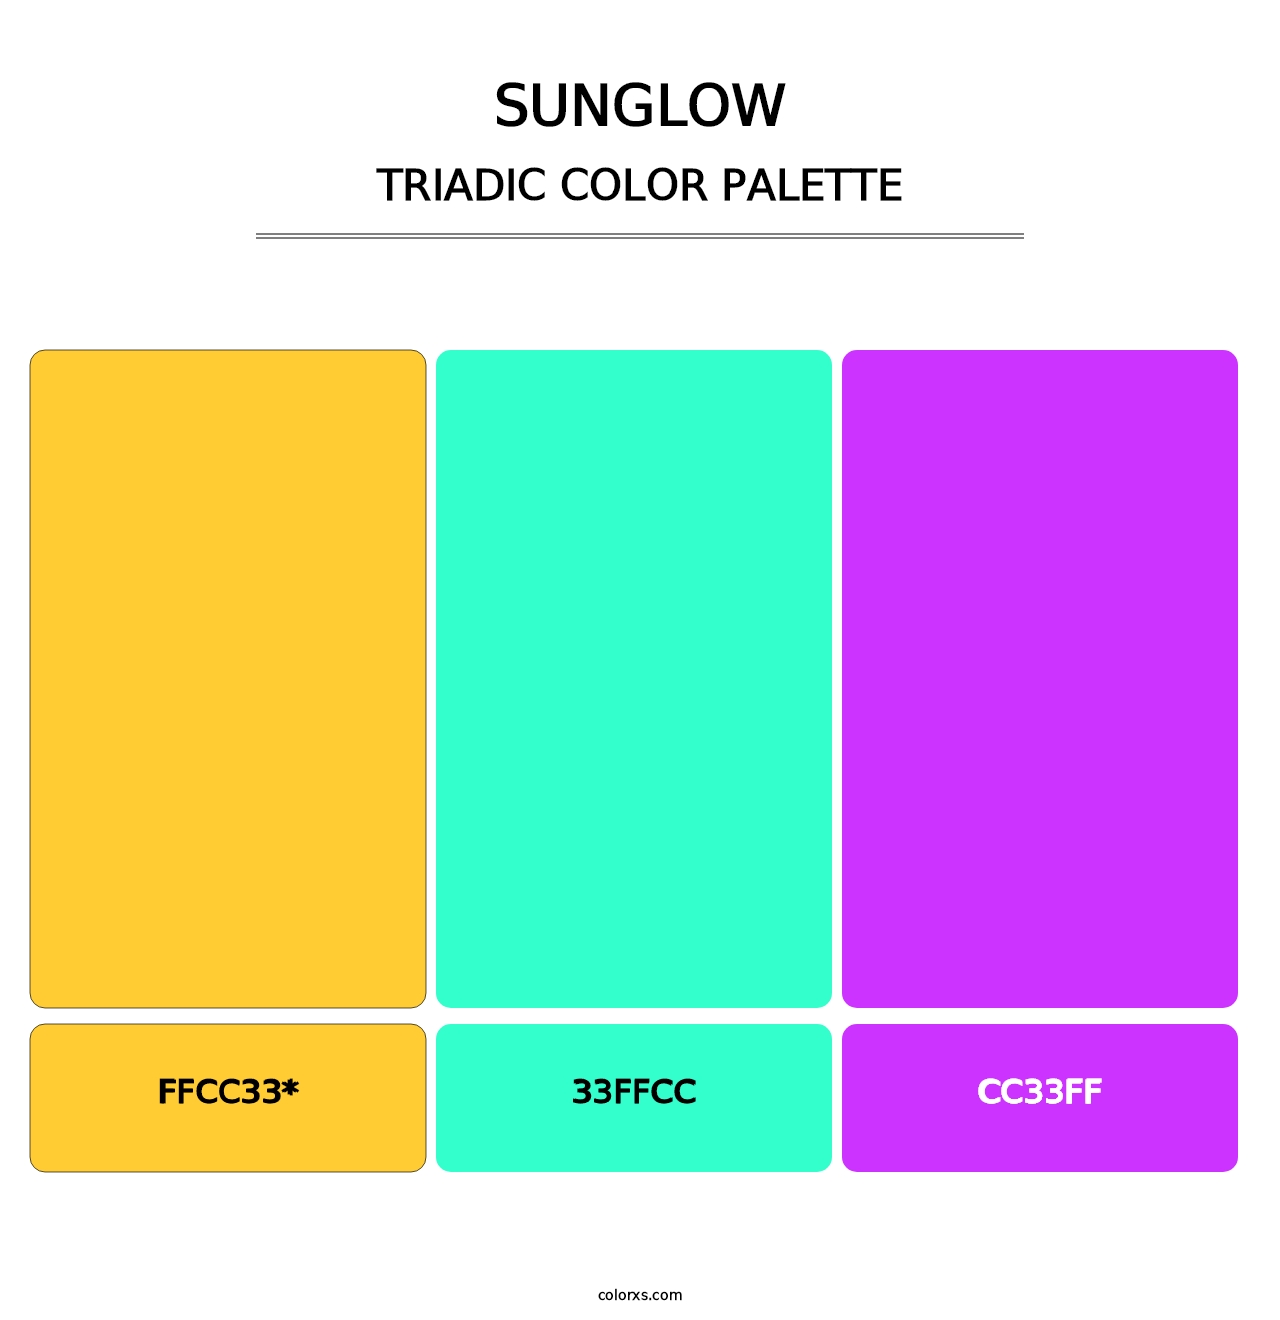 Sunglow - Triadic Color Palette